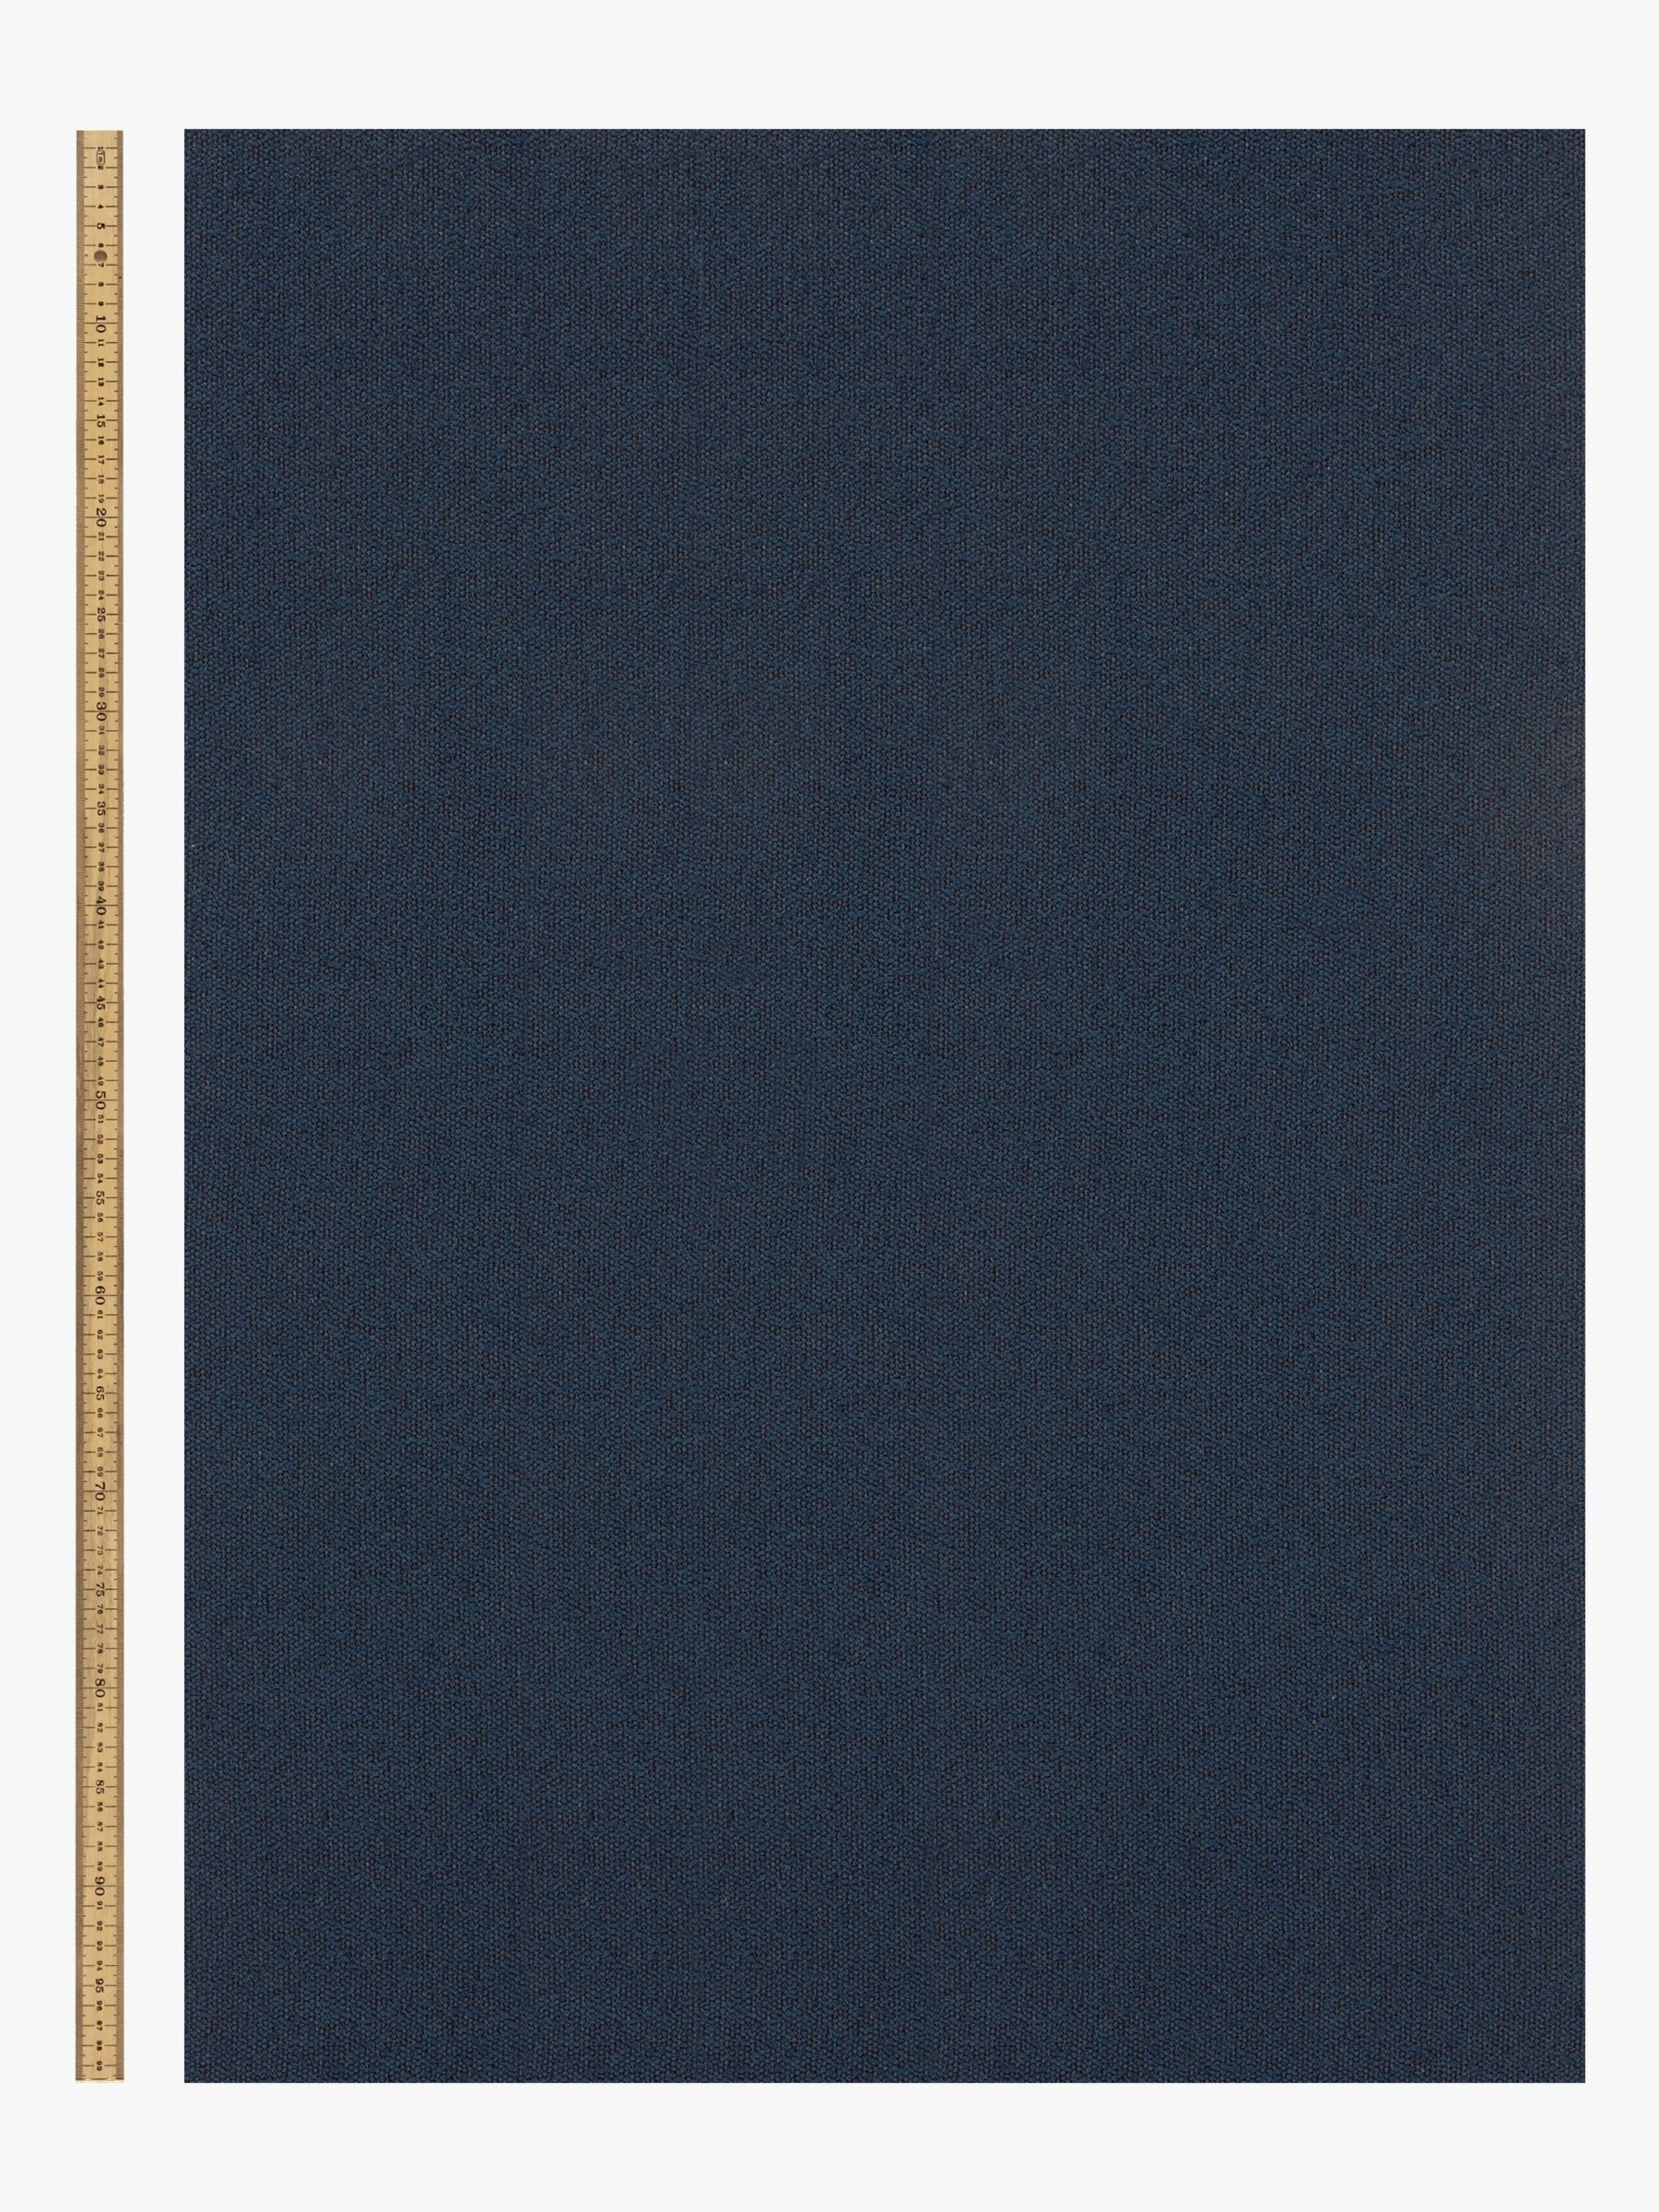 John Lewis Boucle Plain Fabric, Dark Navy, Price Band C